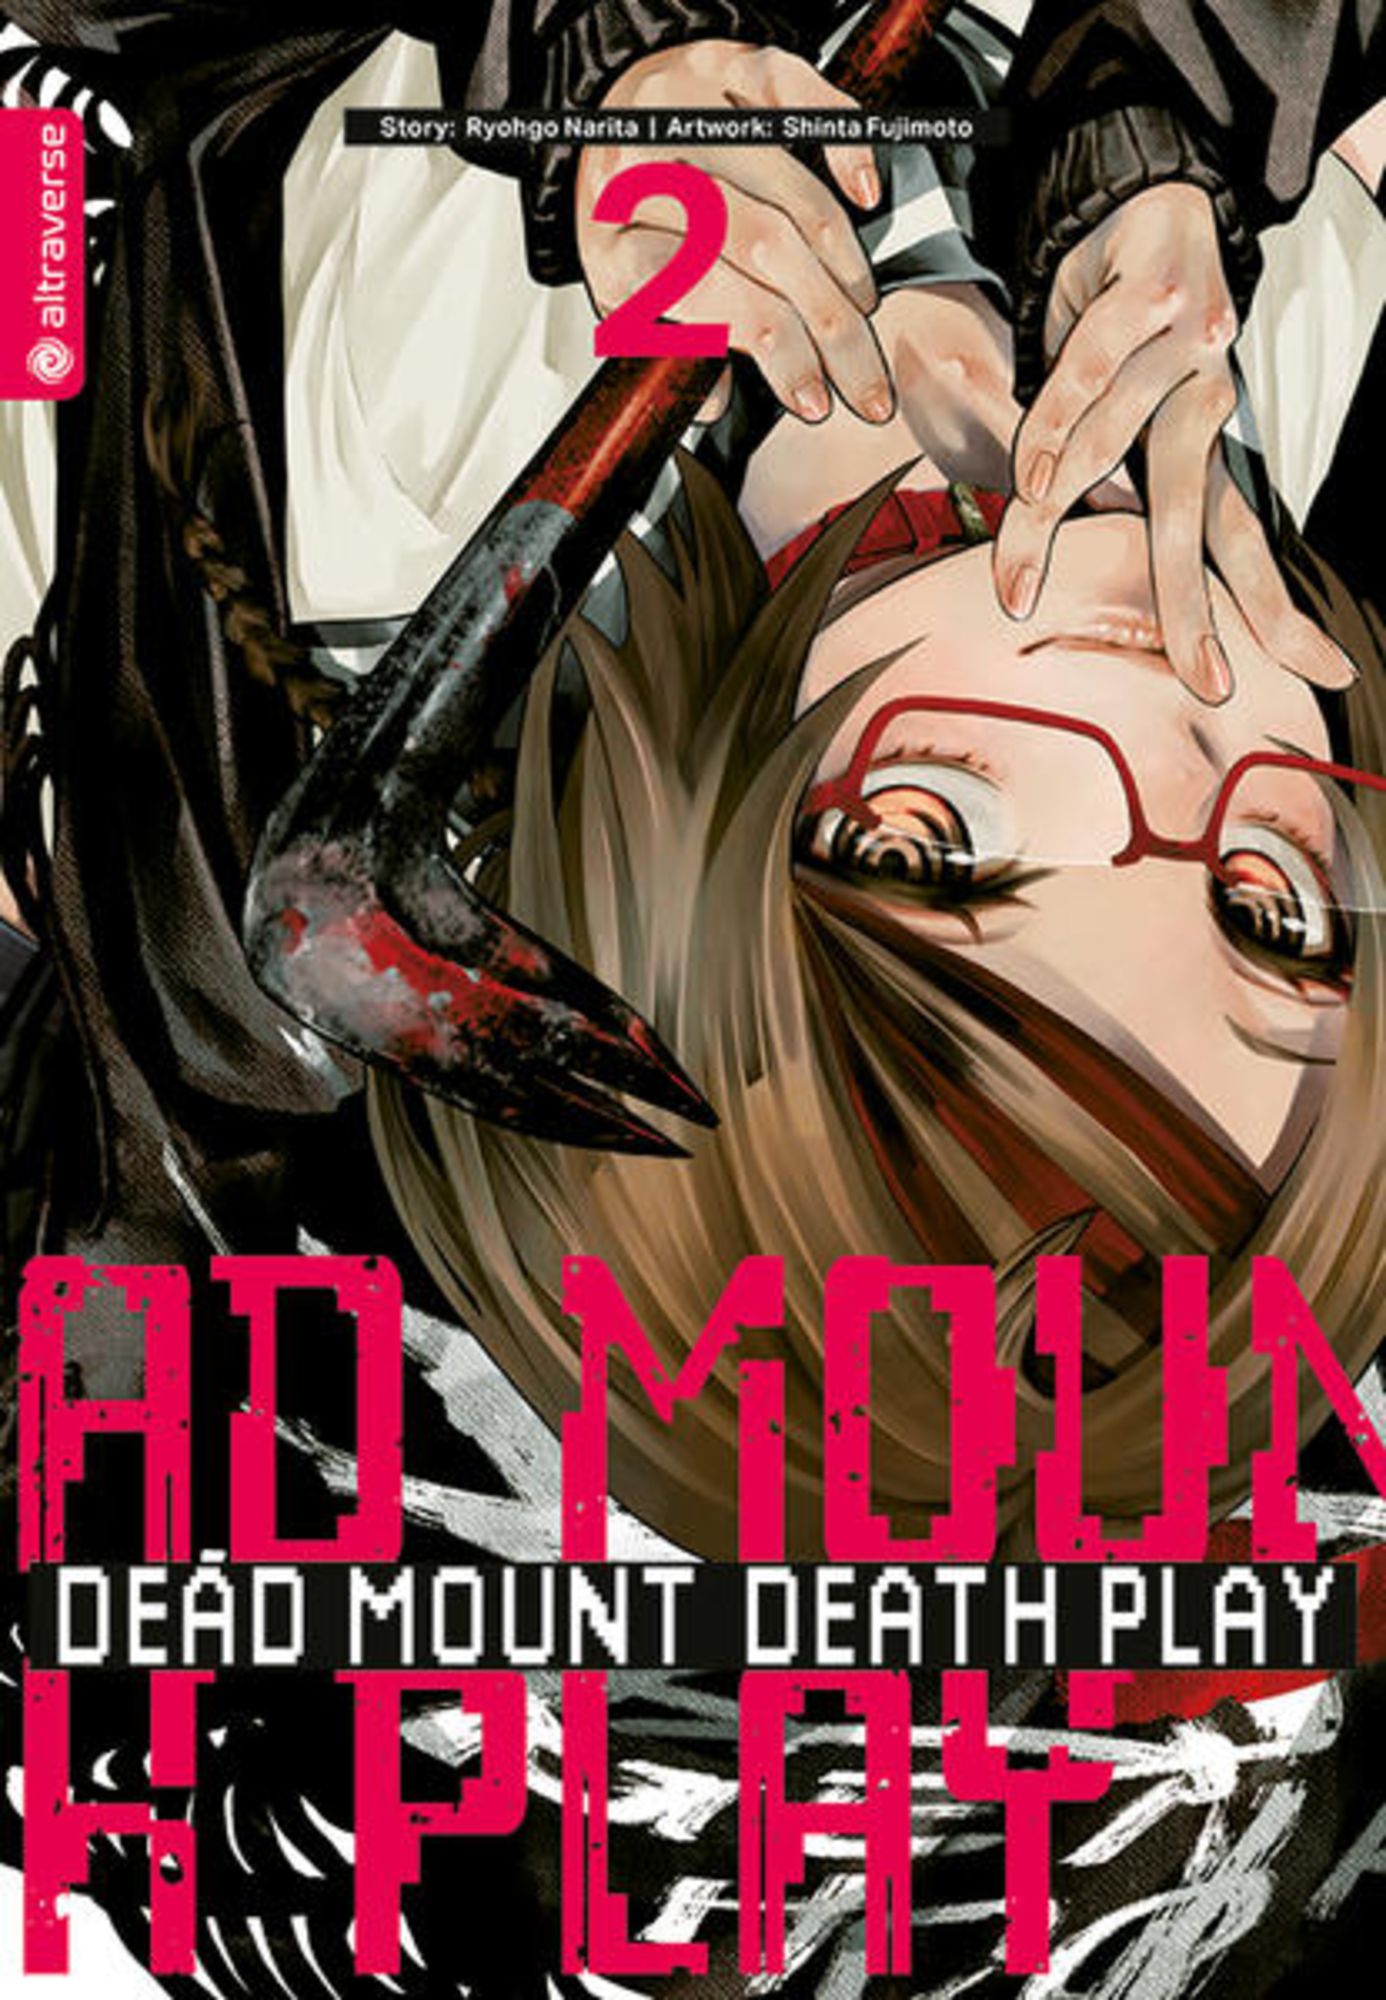 Dead Mount Death Play 93 Dead Mount Death Play 02' von 'Ryougo Narita' - Buch - '978-3-7539-0070-4'